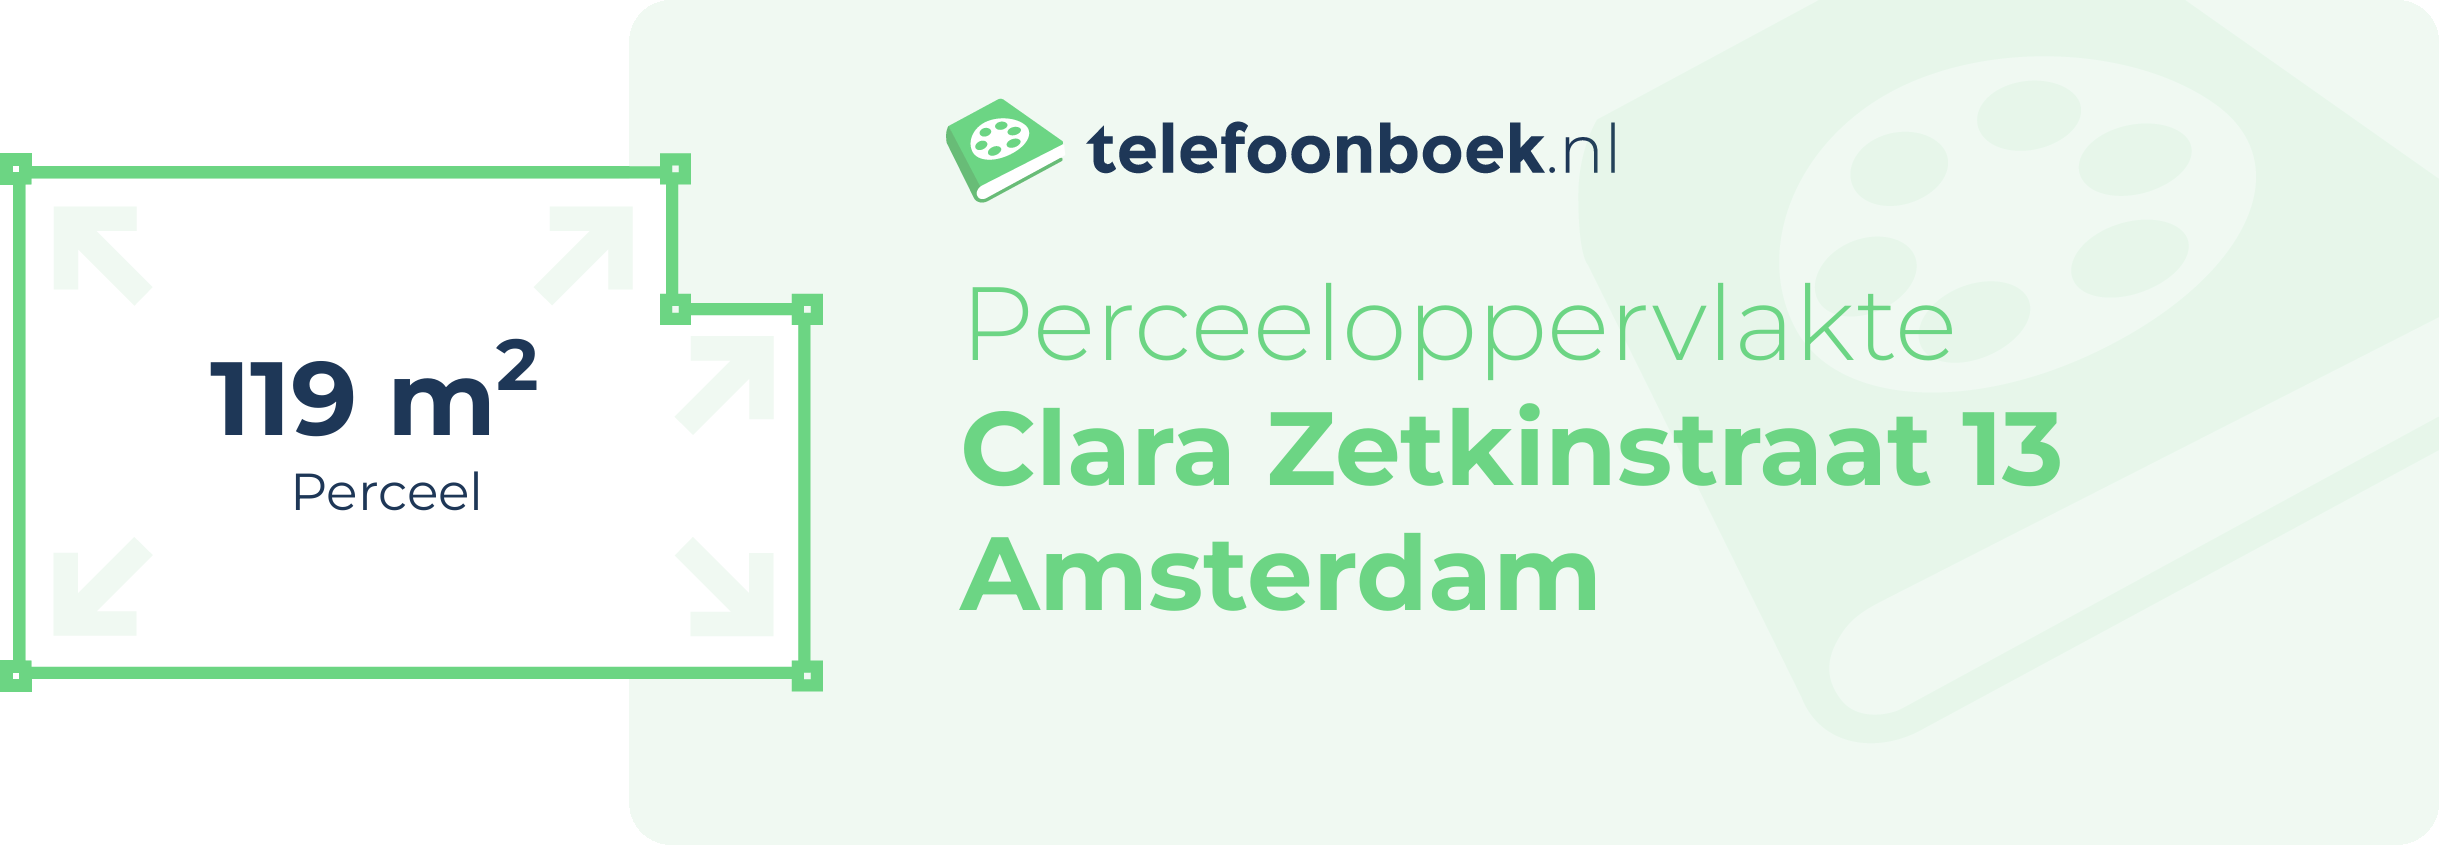 Perceeloppervlakte Clara Zetkinstraat 13 Amsterdam